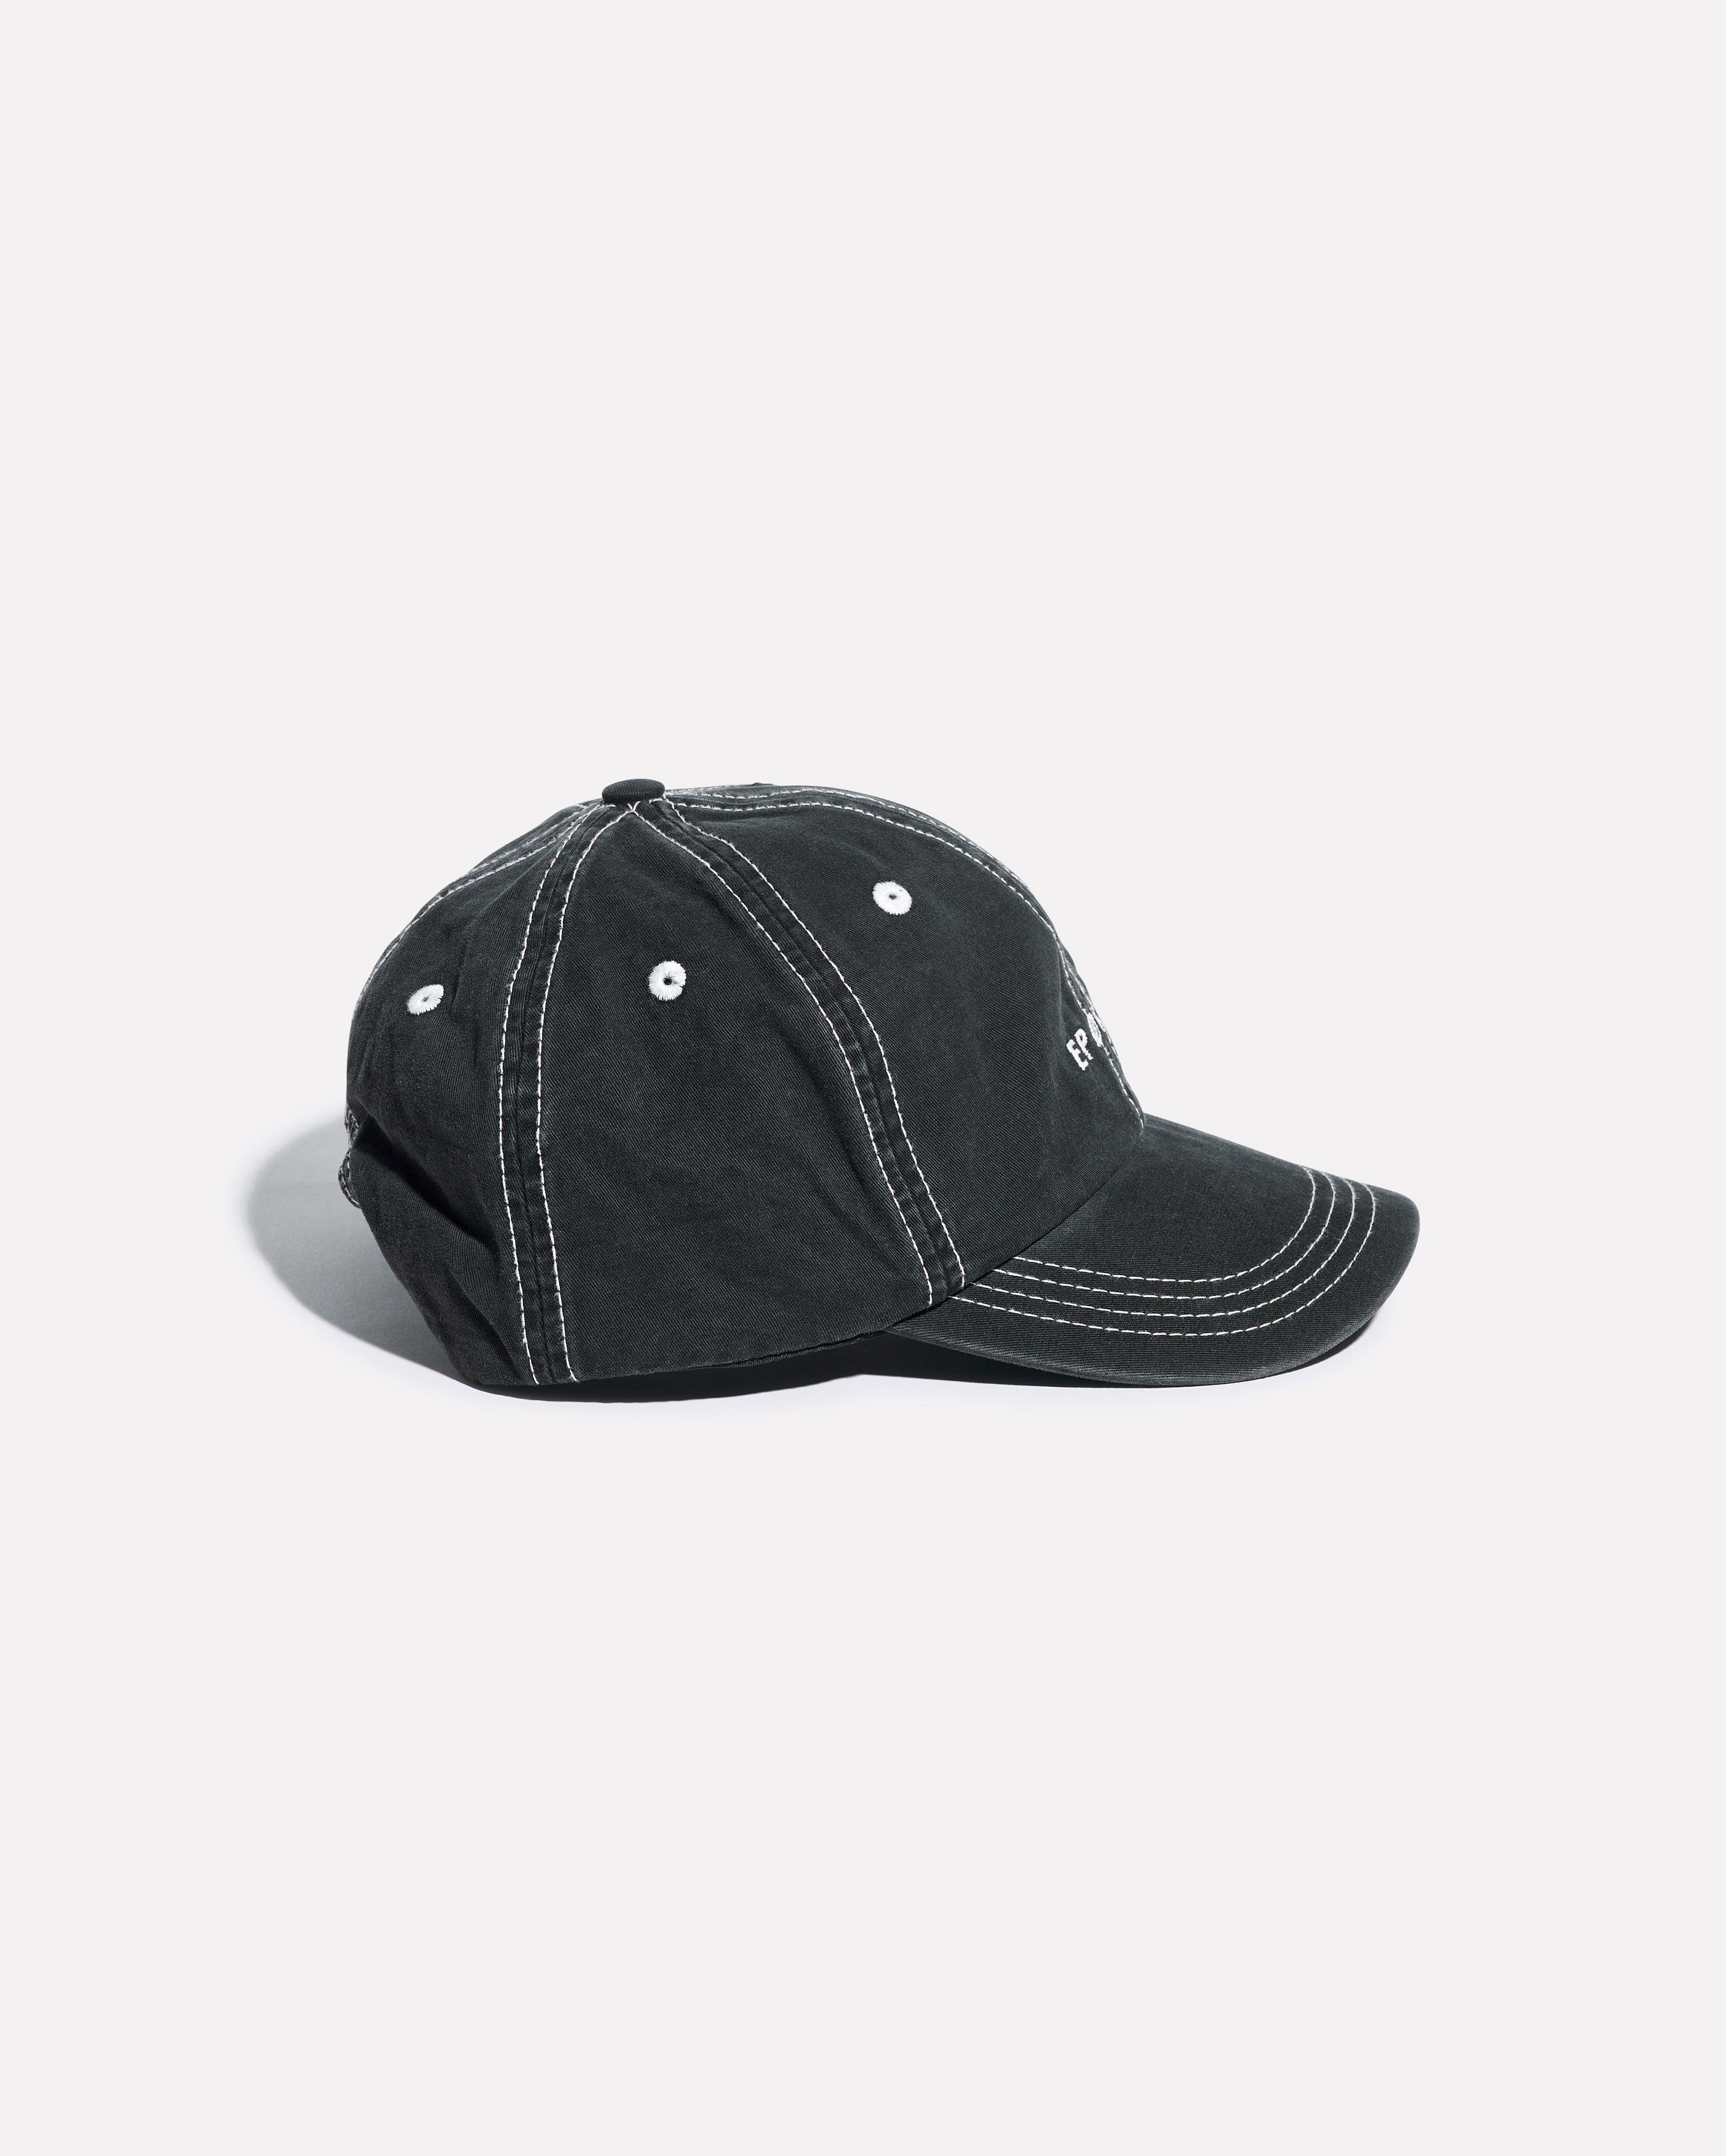 Epokhe Logo Hat - Black - Accsesories - EPOKHE EYEWEAR